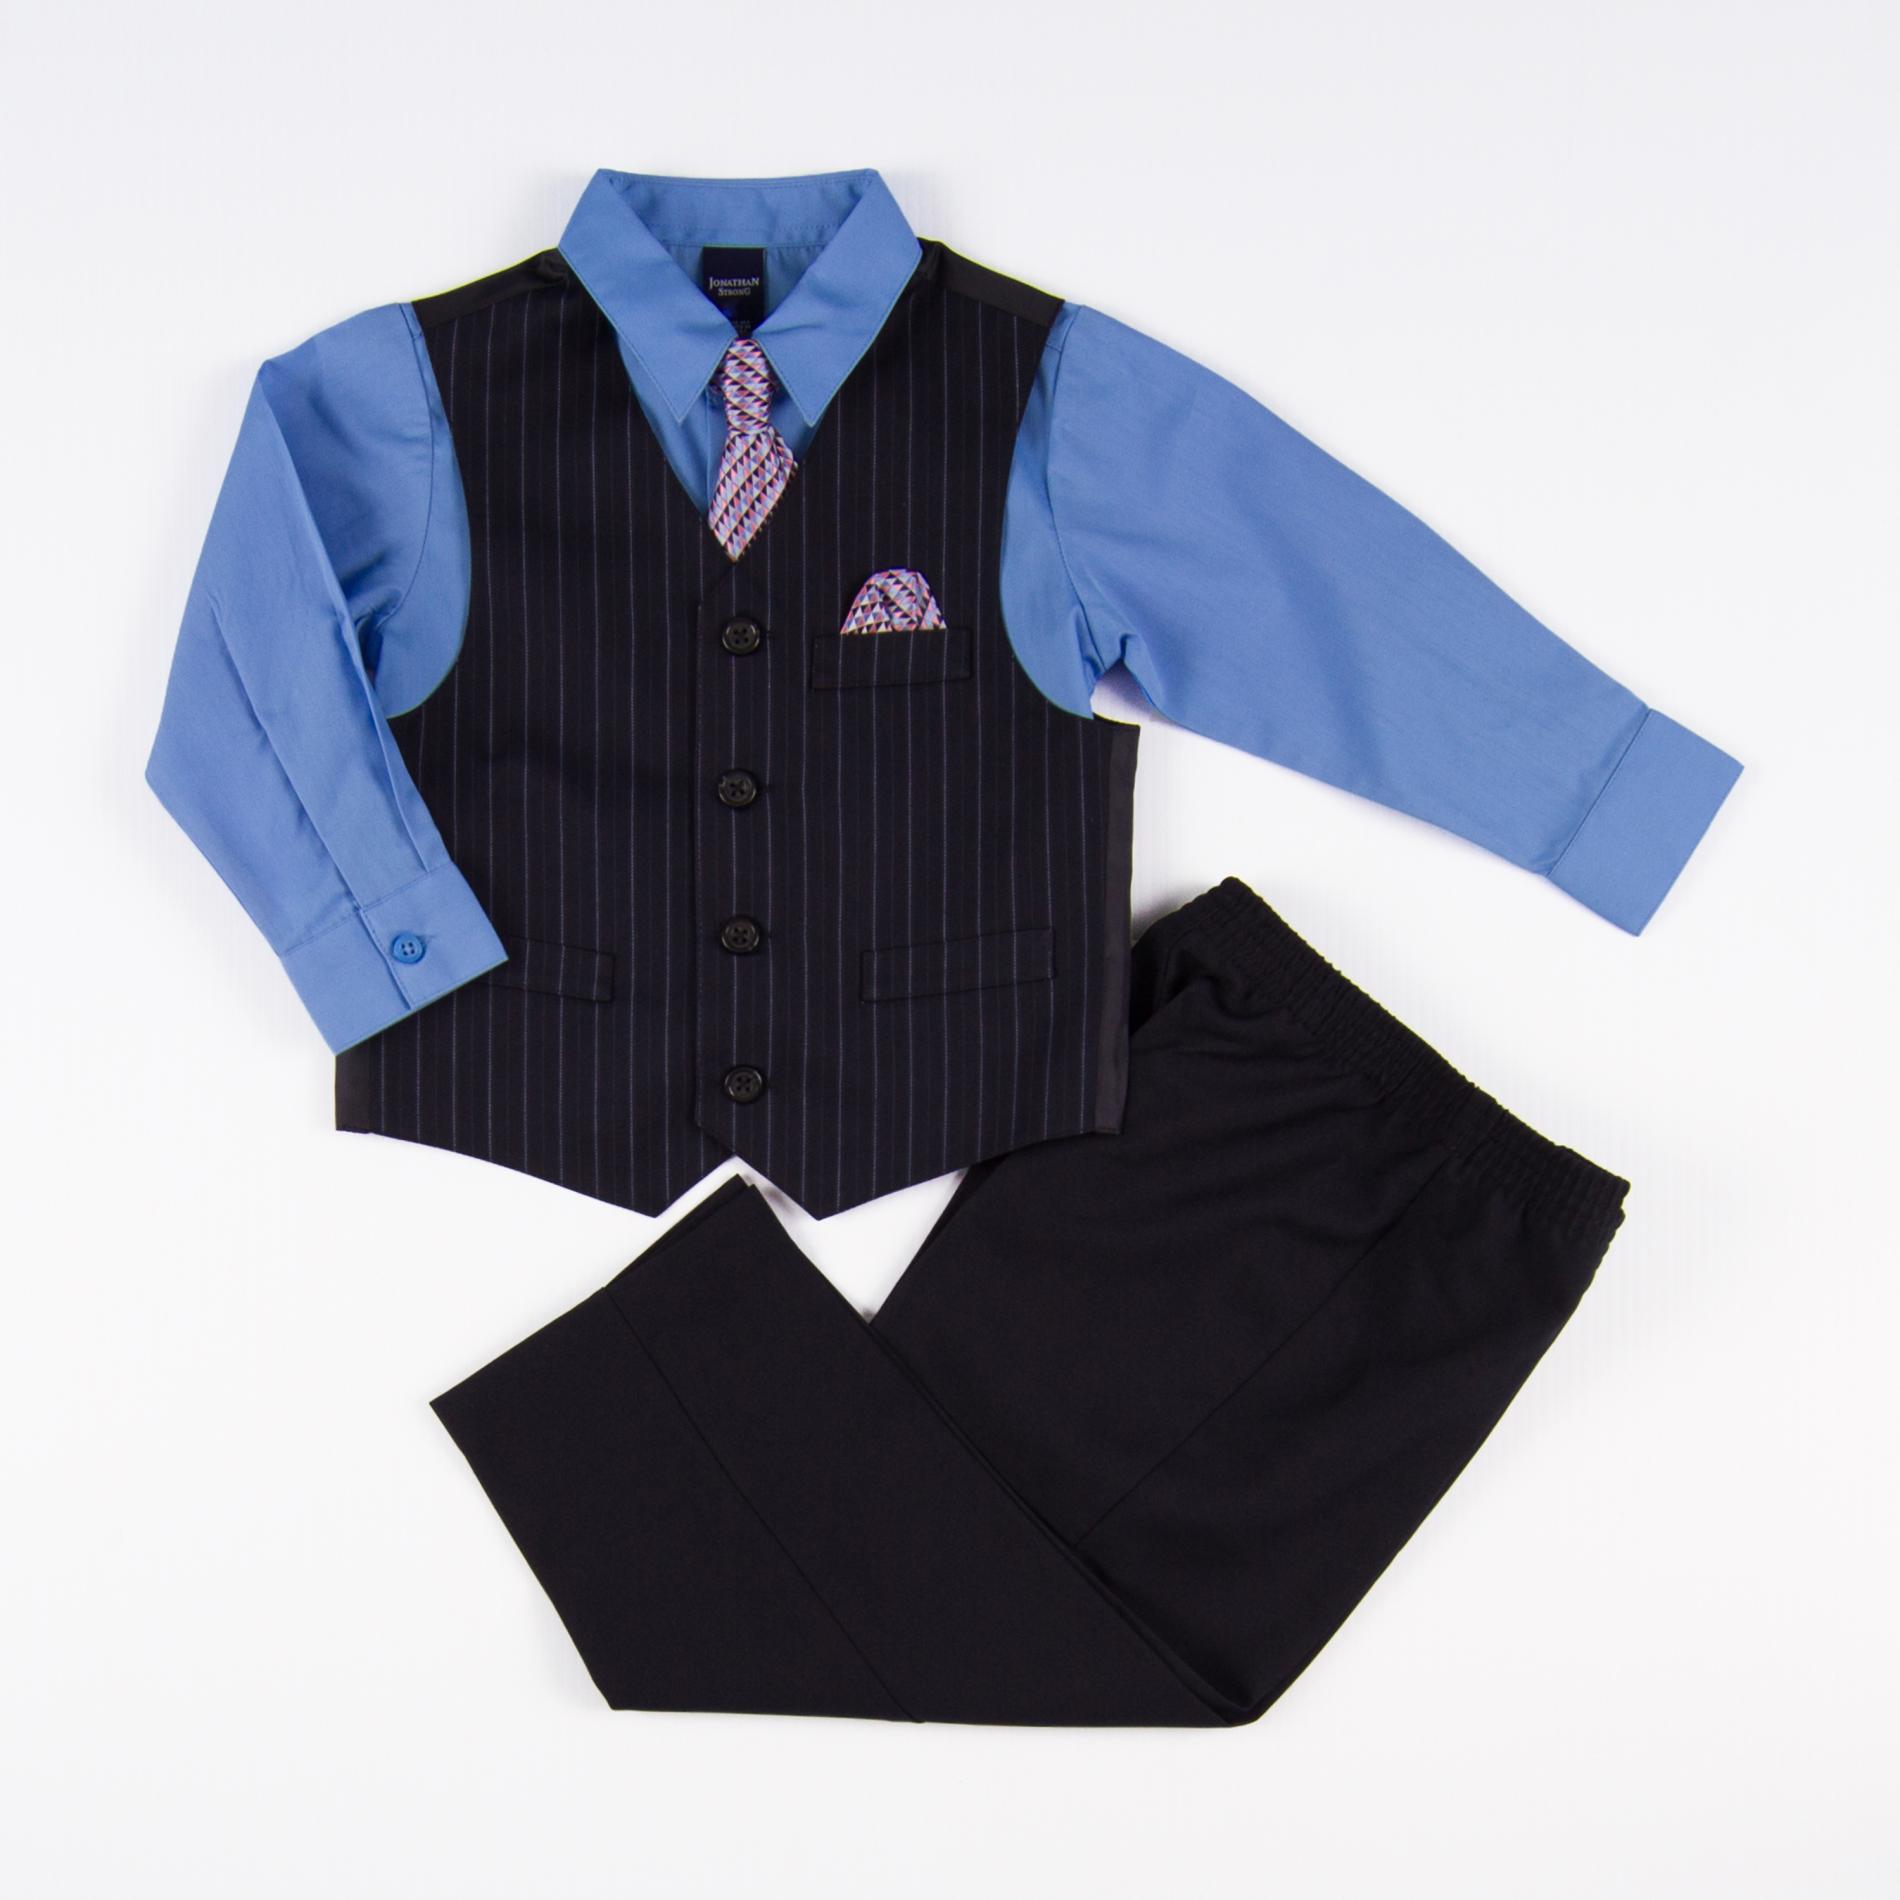 Jonathan Strong Infant & Toddler Boy's Shirt  Vest  Tie & Pants - Pocket Square